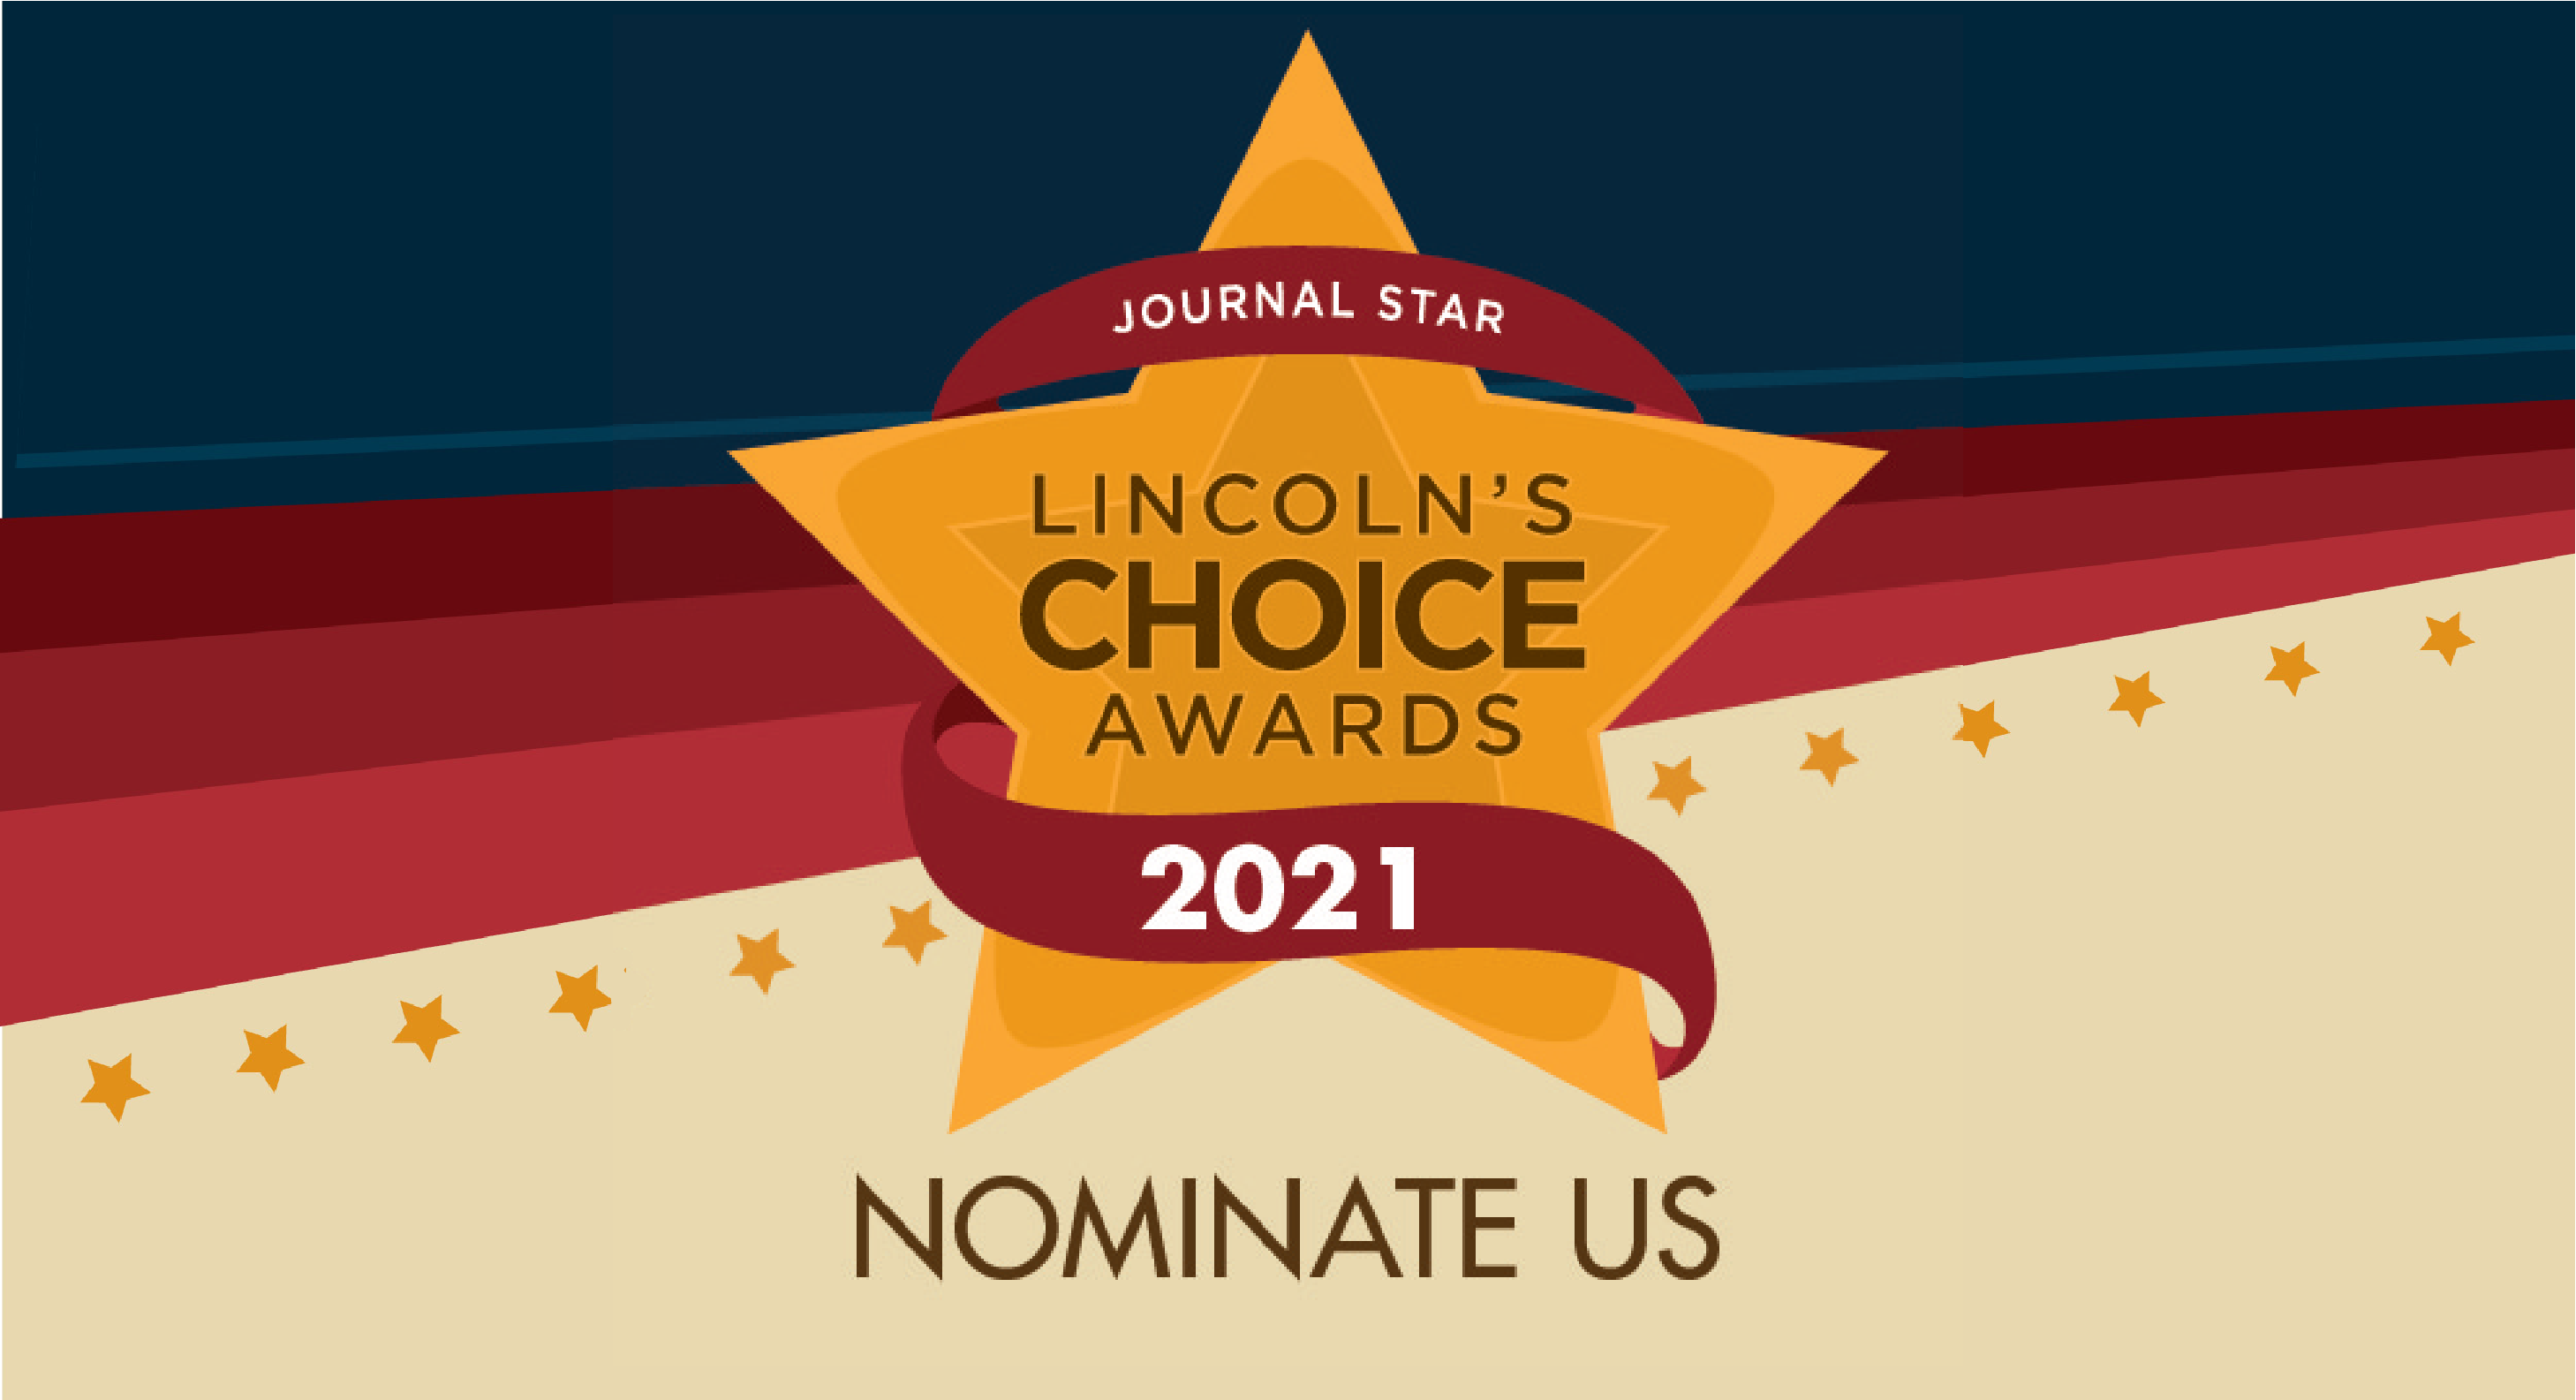 Lincoln's Choice Awards